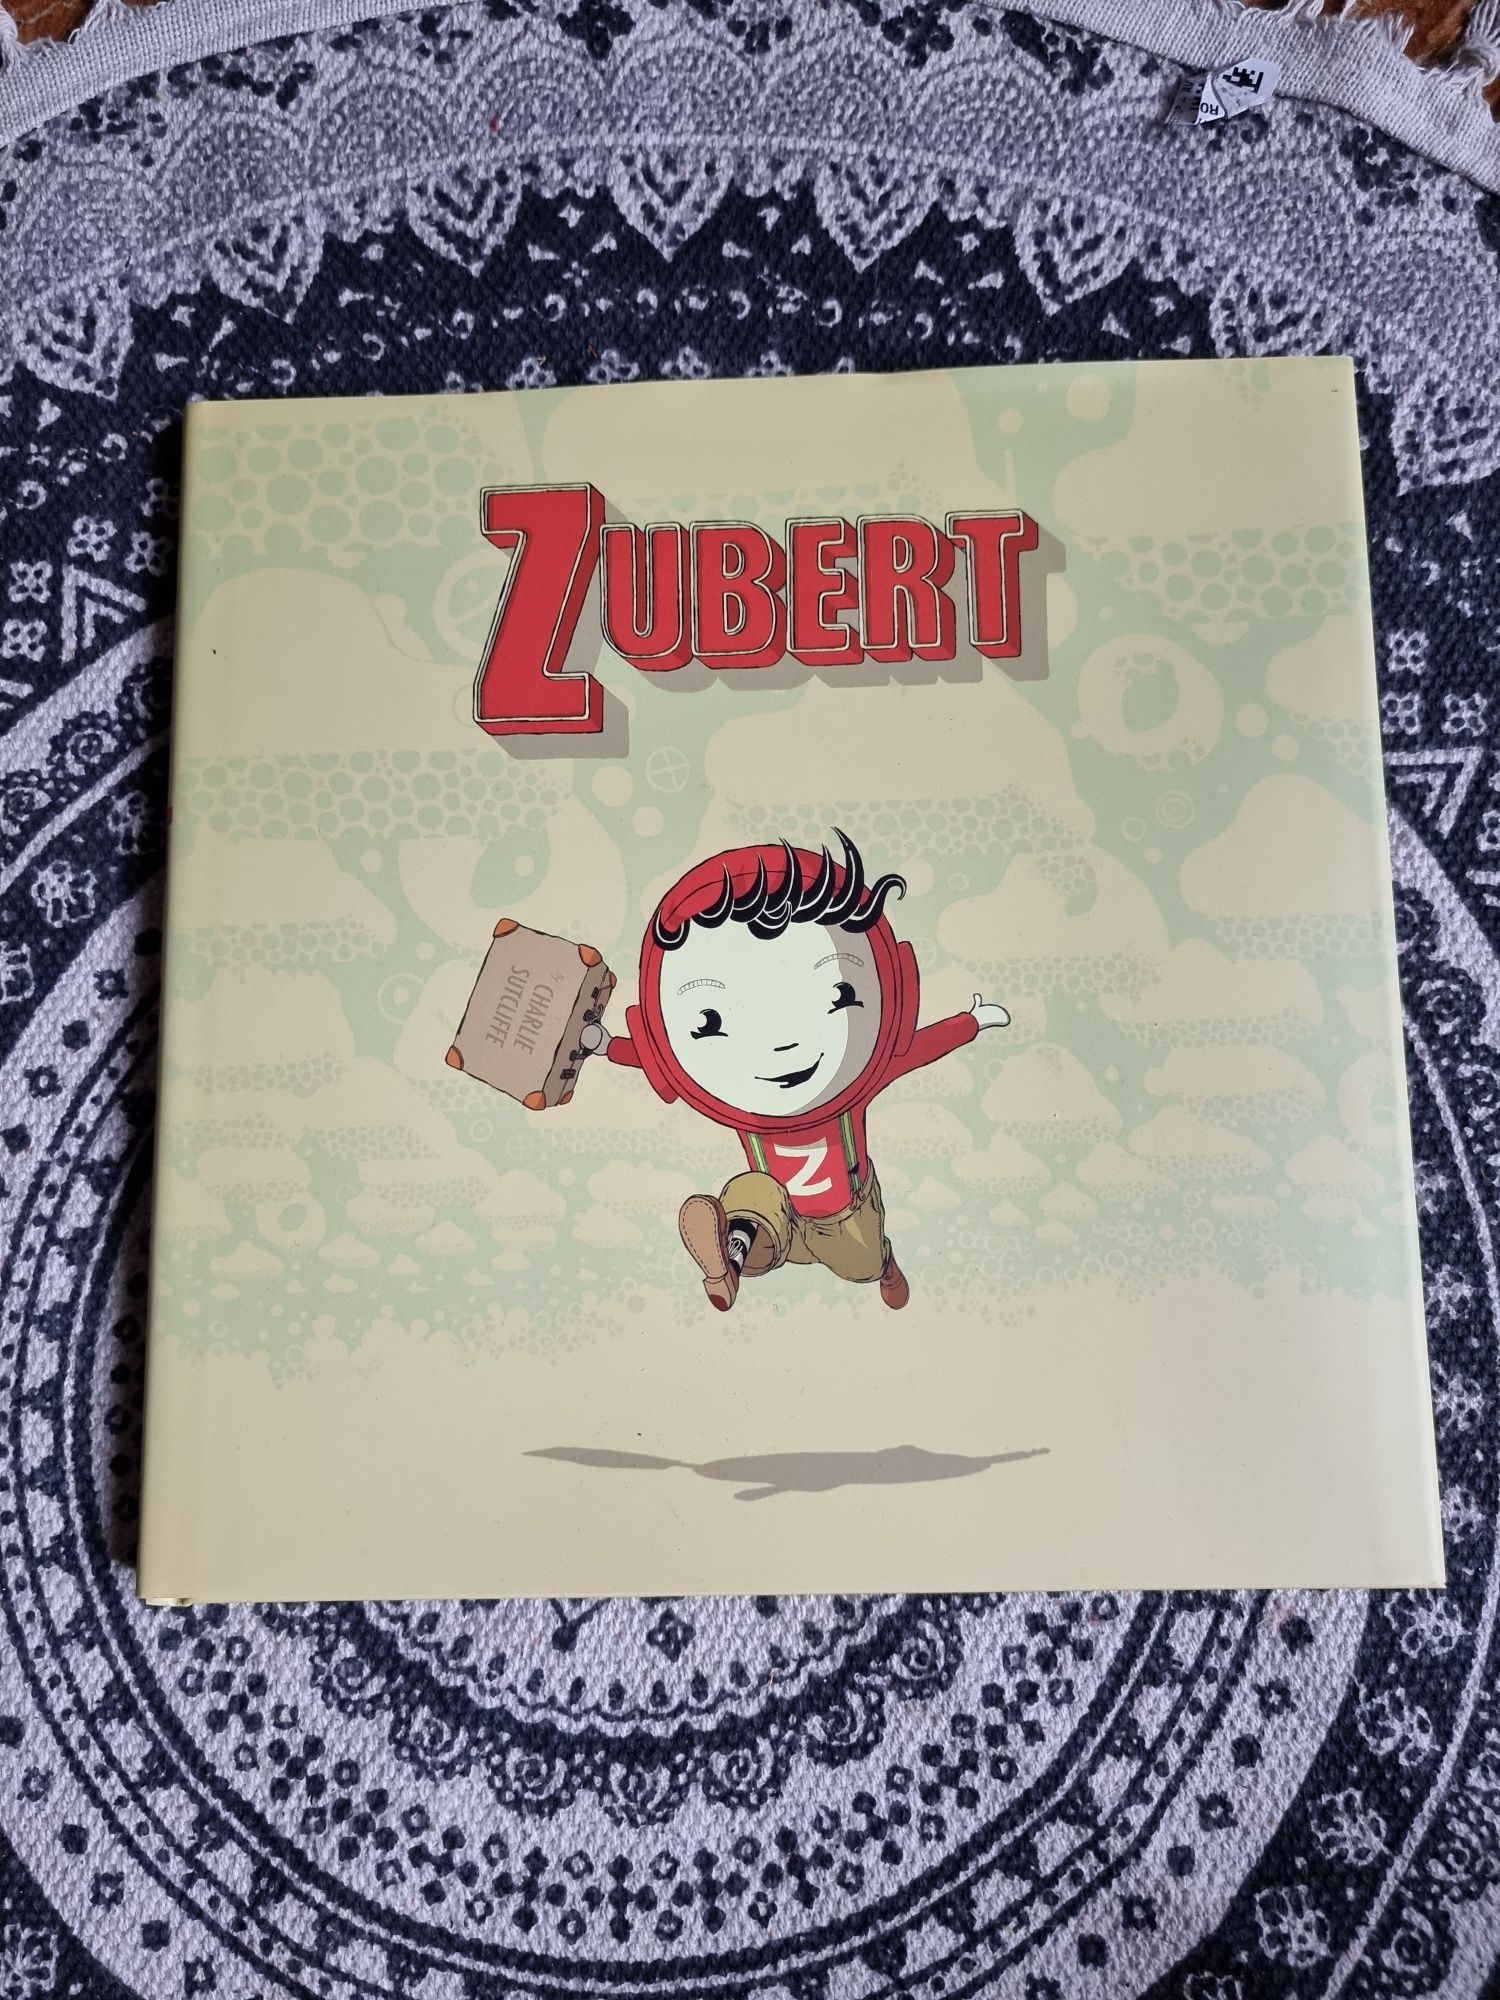 Zubert, Bob's Friend, carti in limba engleza